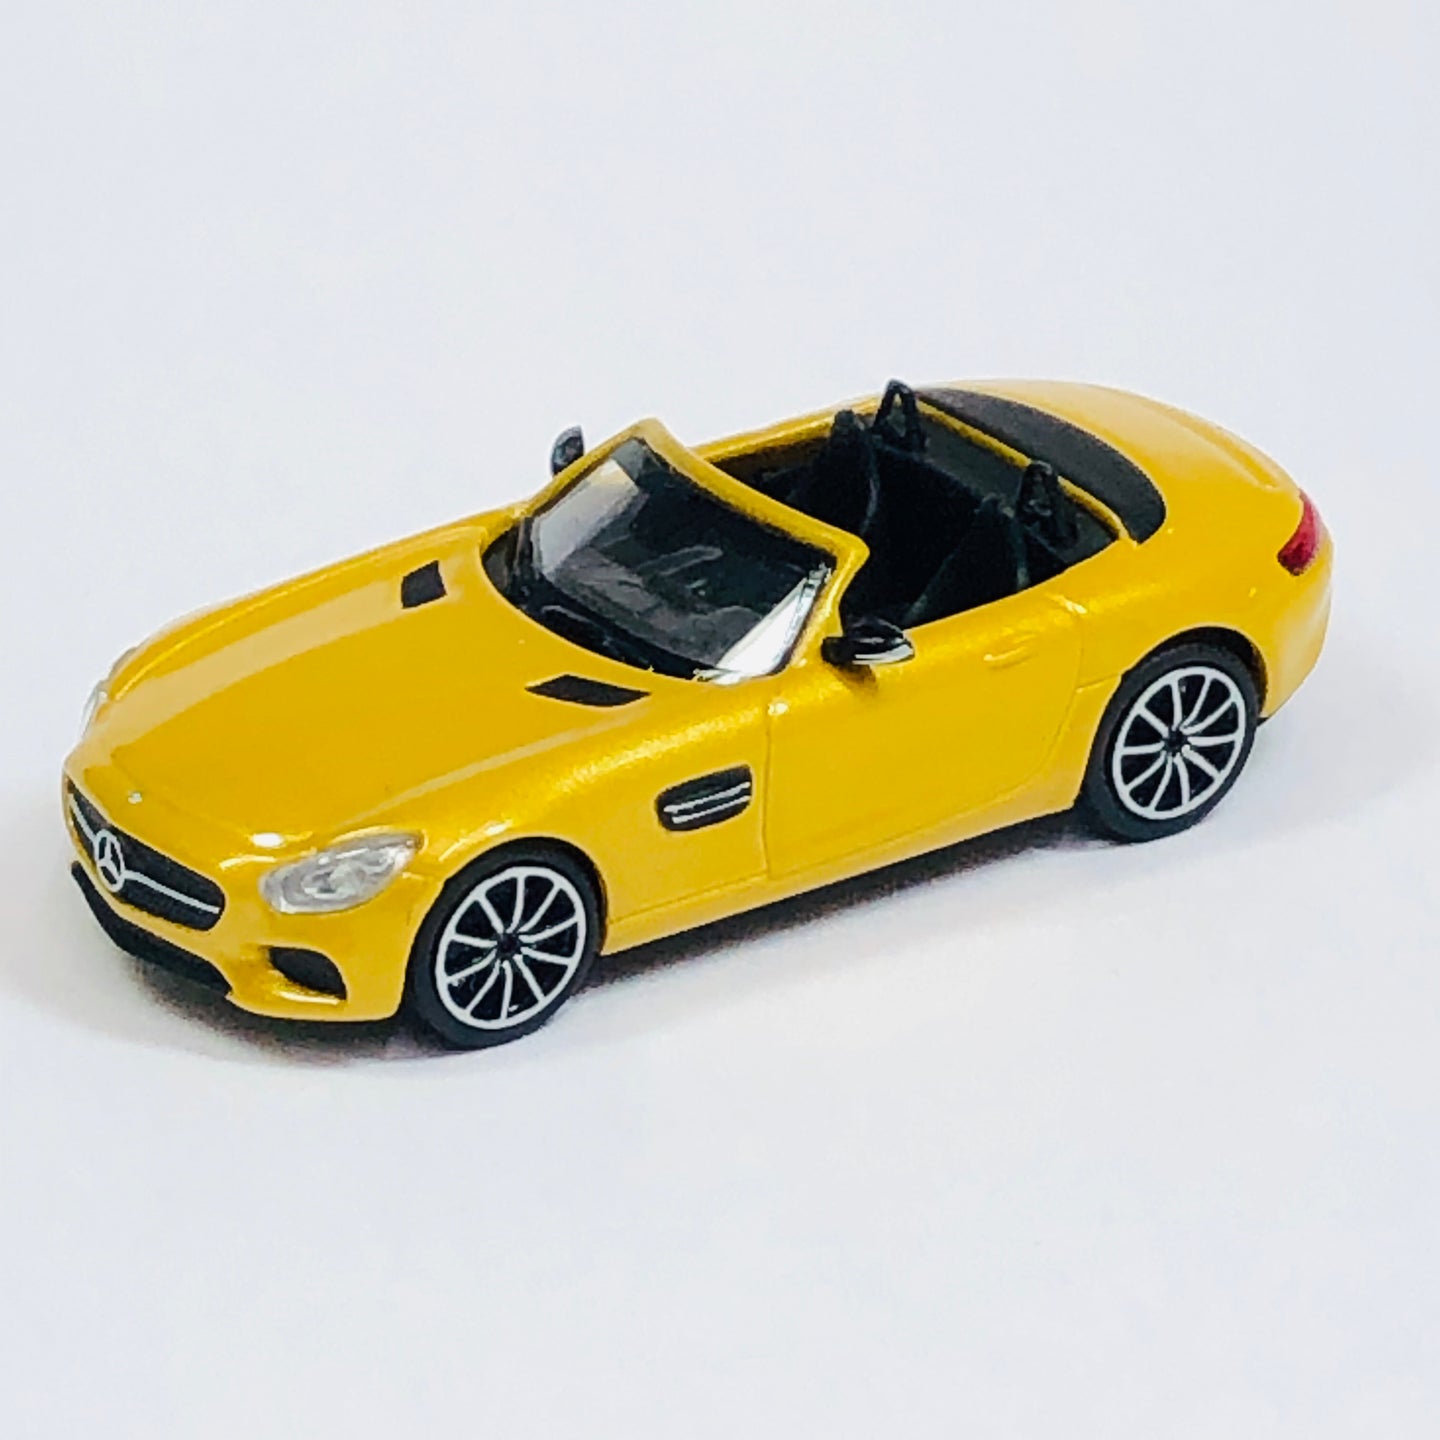 Minichamps 1/87 HO Mercedes AMG GT Roadster 2015 (Yellow Metallic) 870037132 SALE!